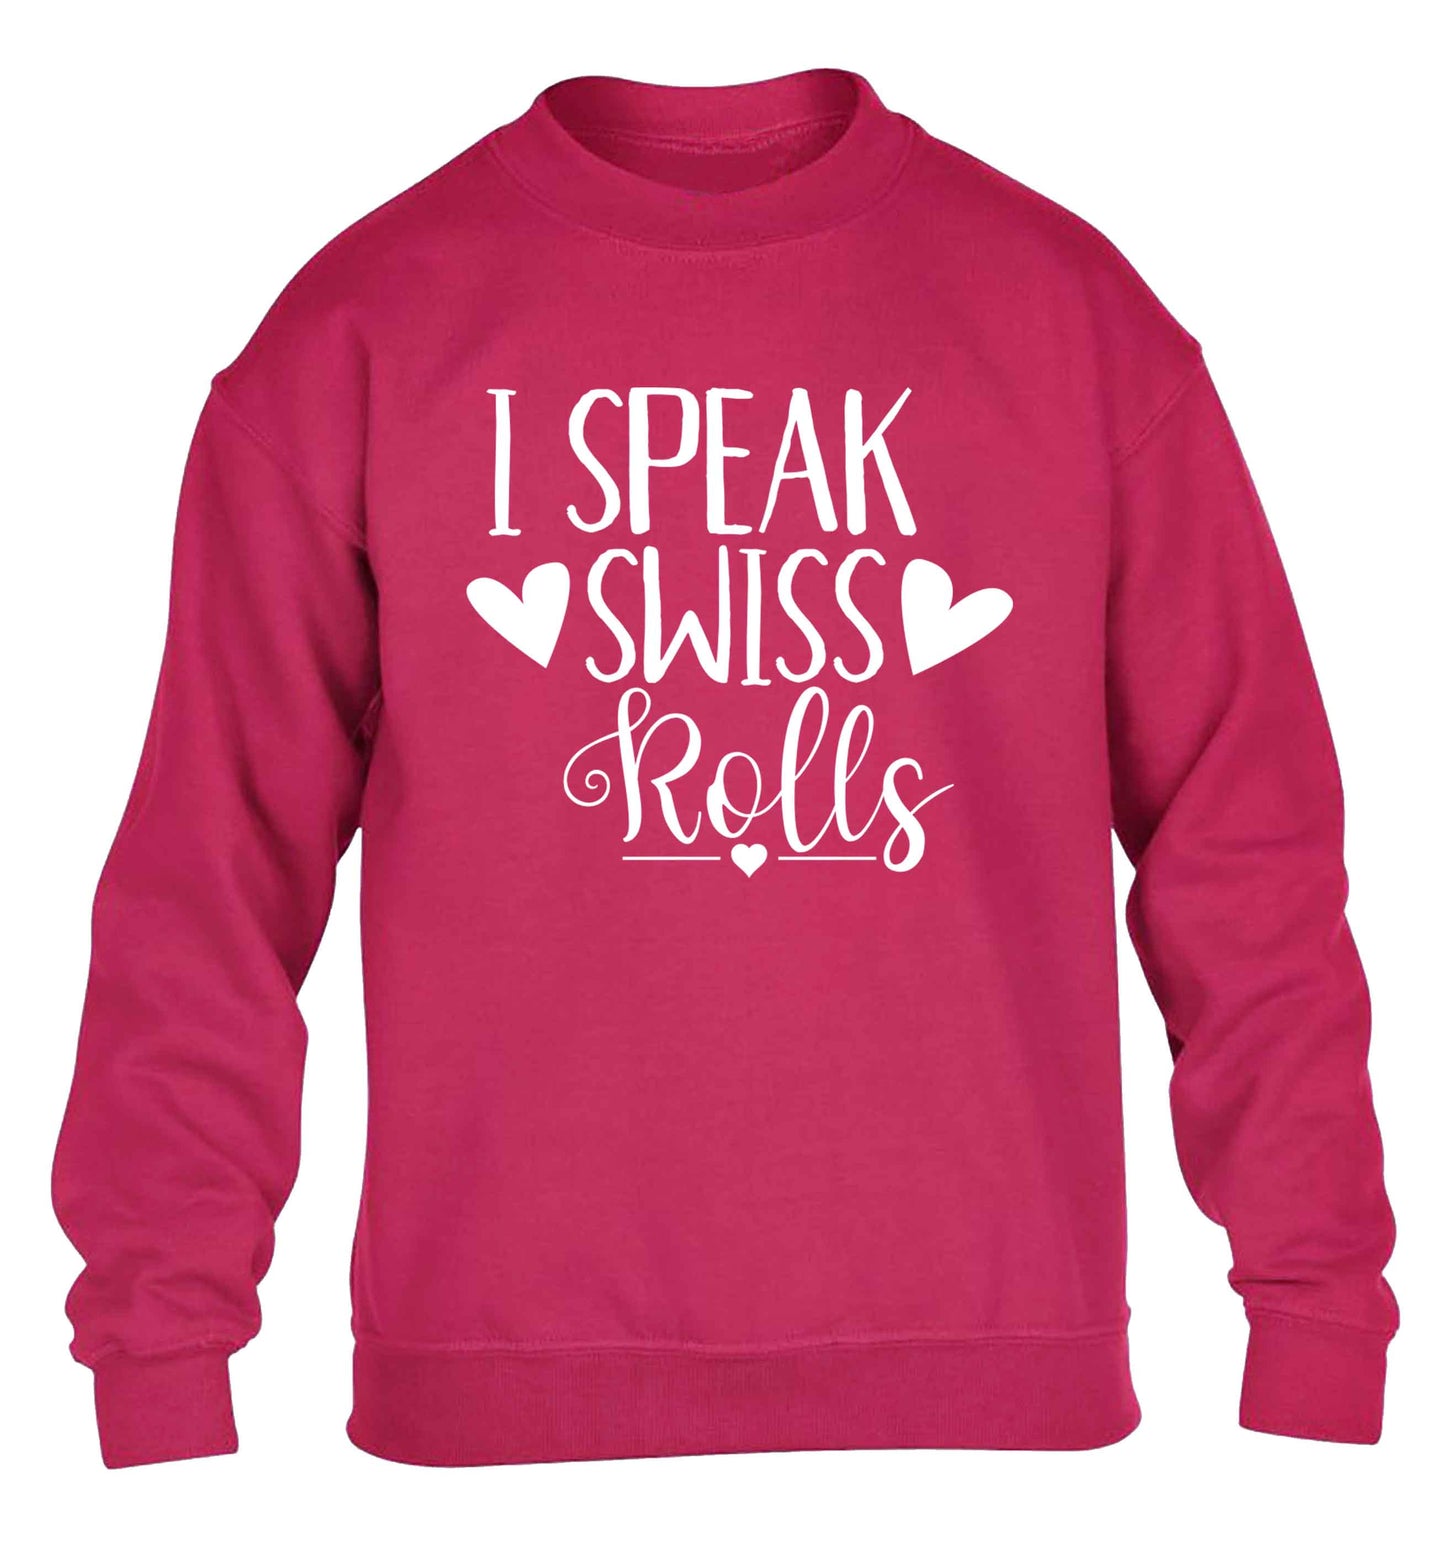 I speak swiss..rolls children's pink sweater 12-13 Years